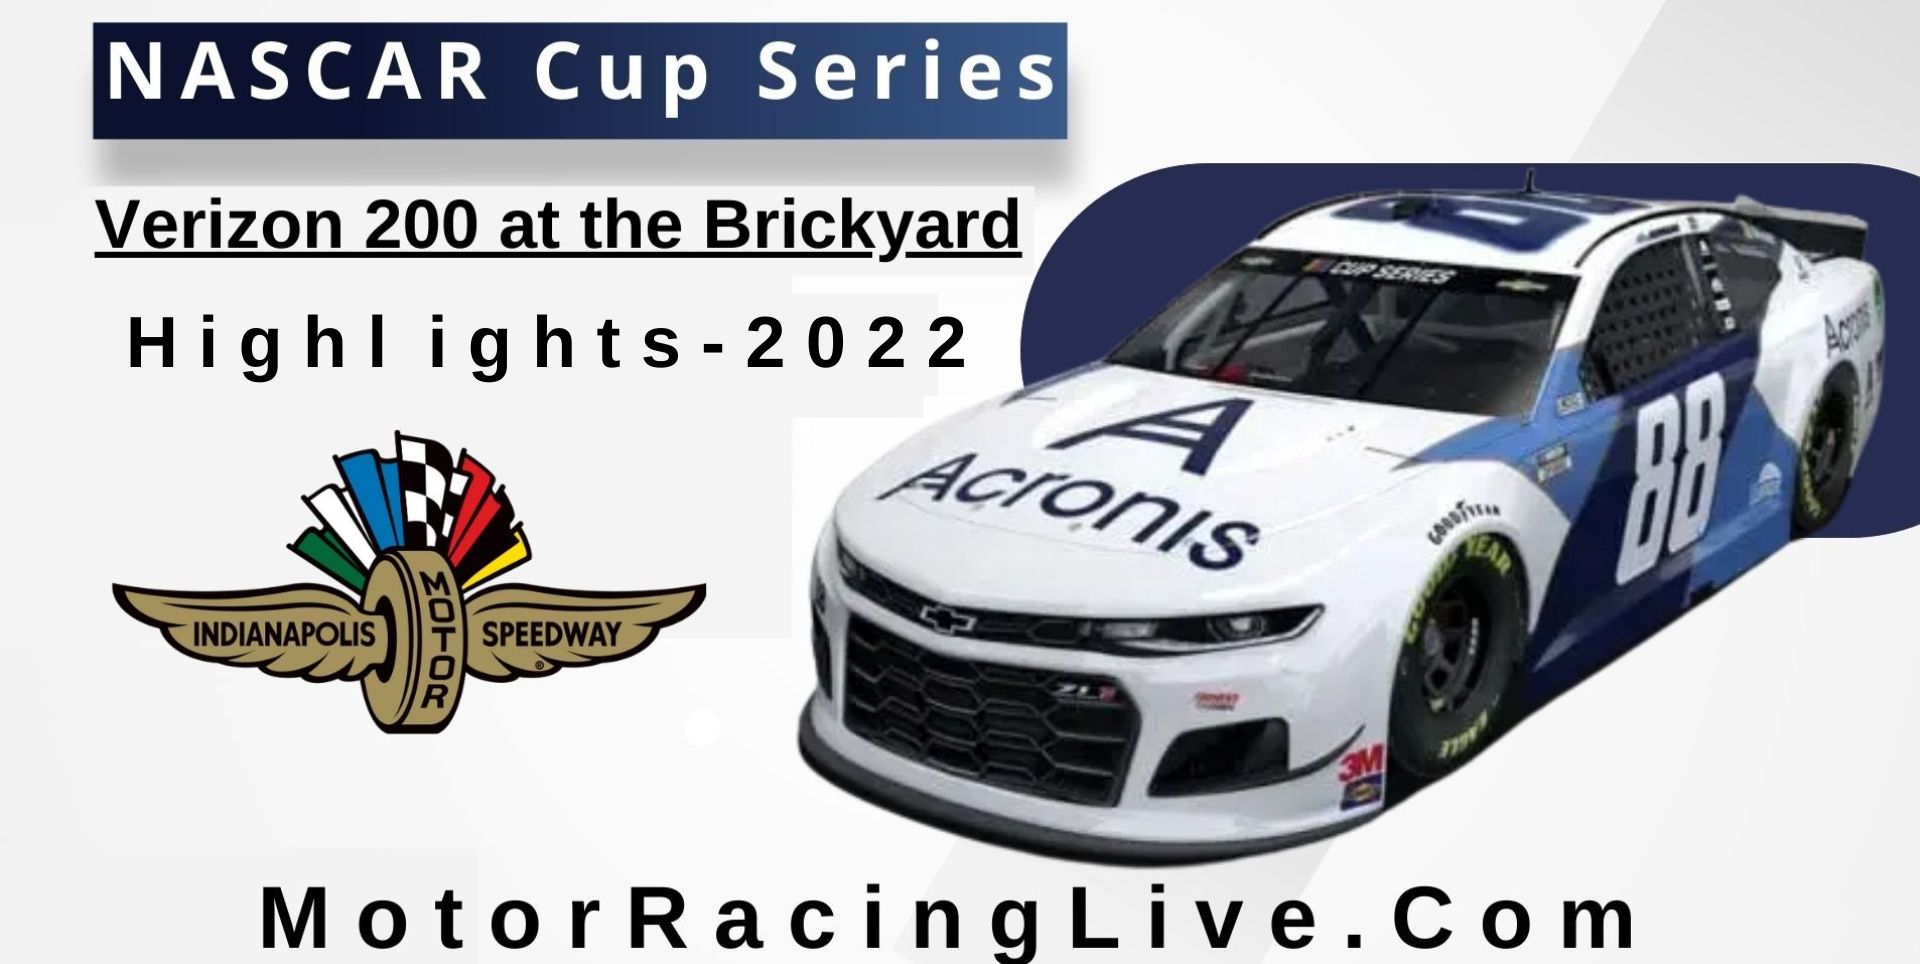 Verizon 200 Highlights 2022 NASCAR Cup Series